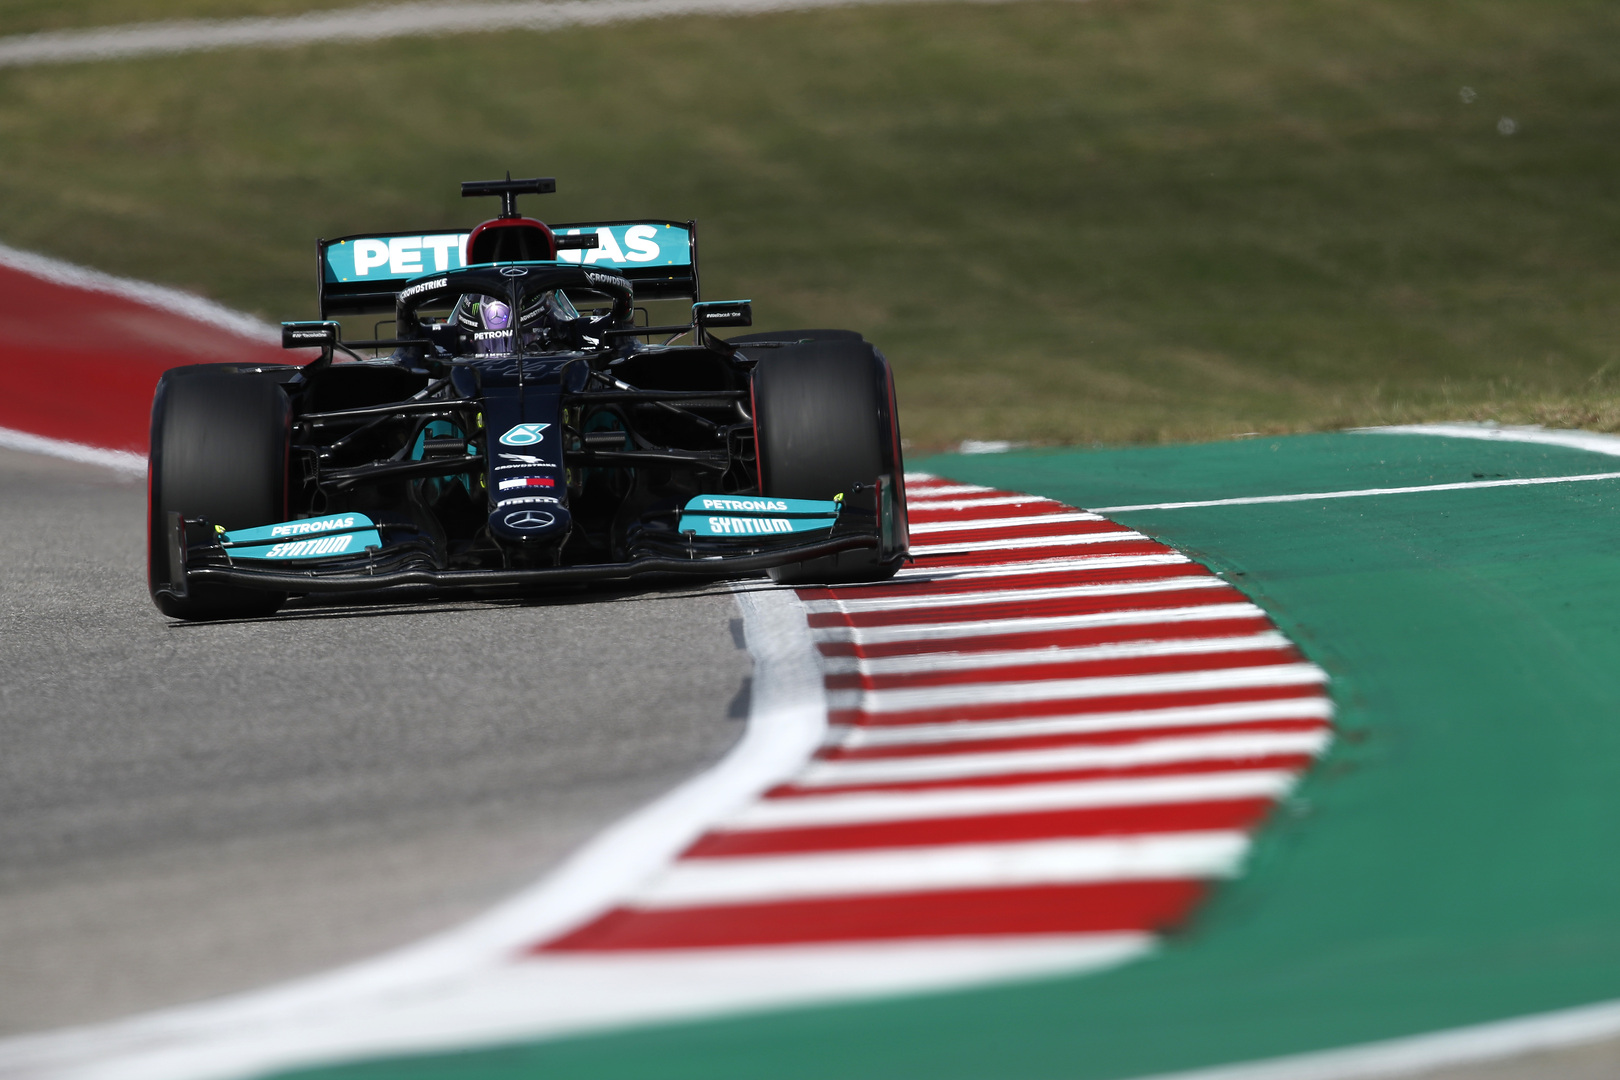 Petronas prolonge son partenariat avec Mercedes F1 au-delà de 2026